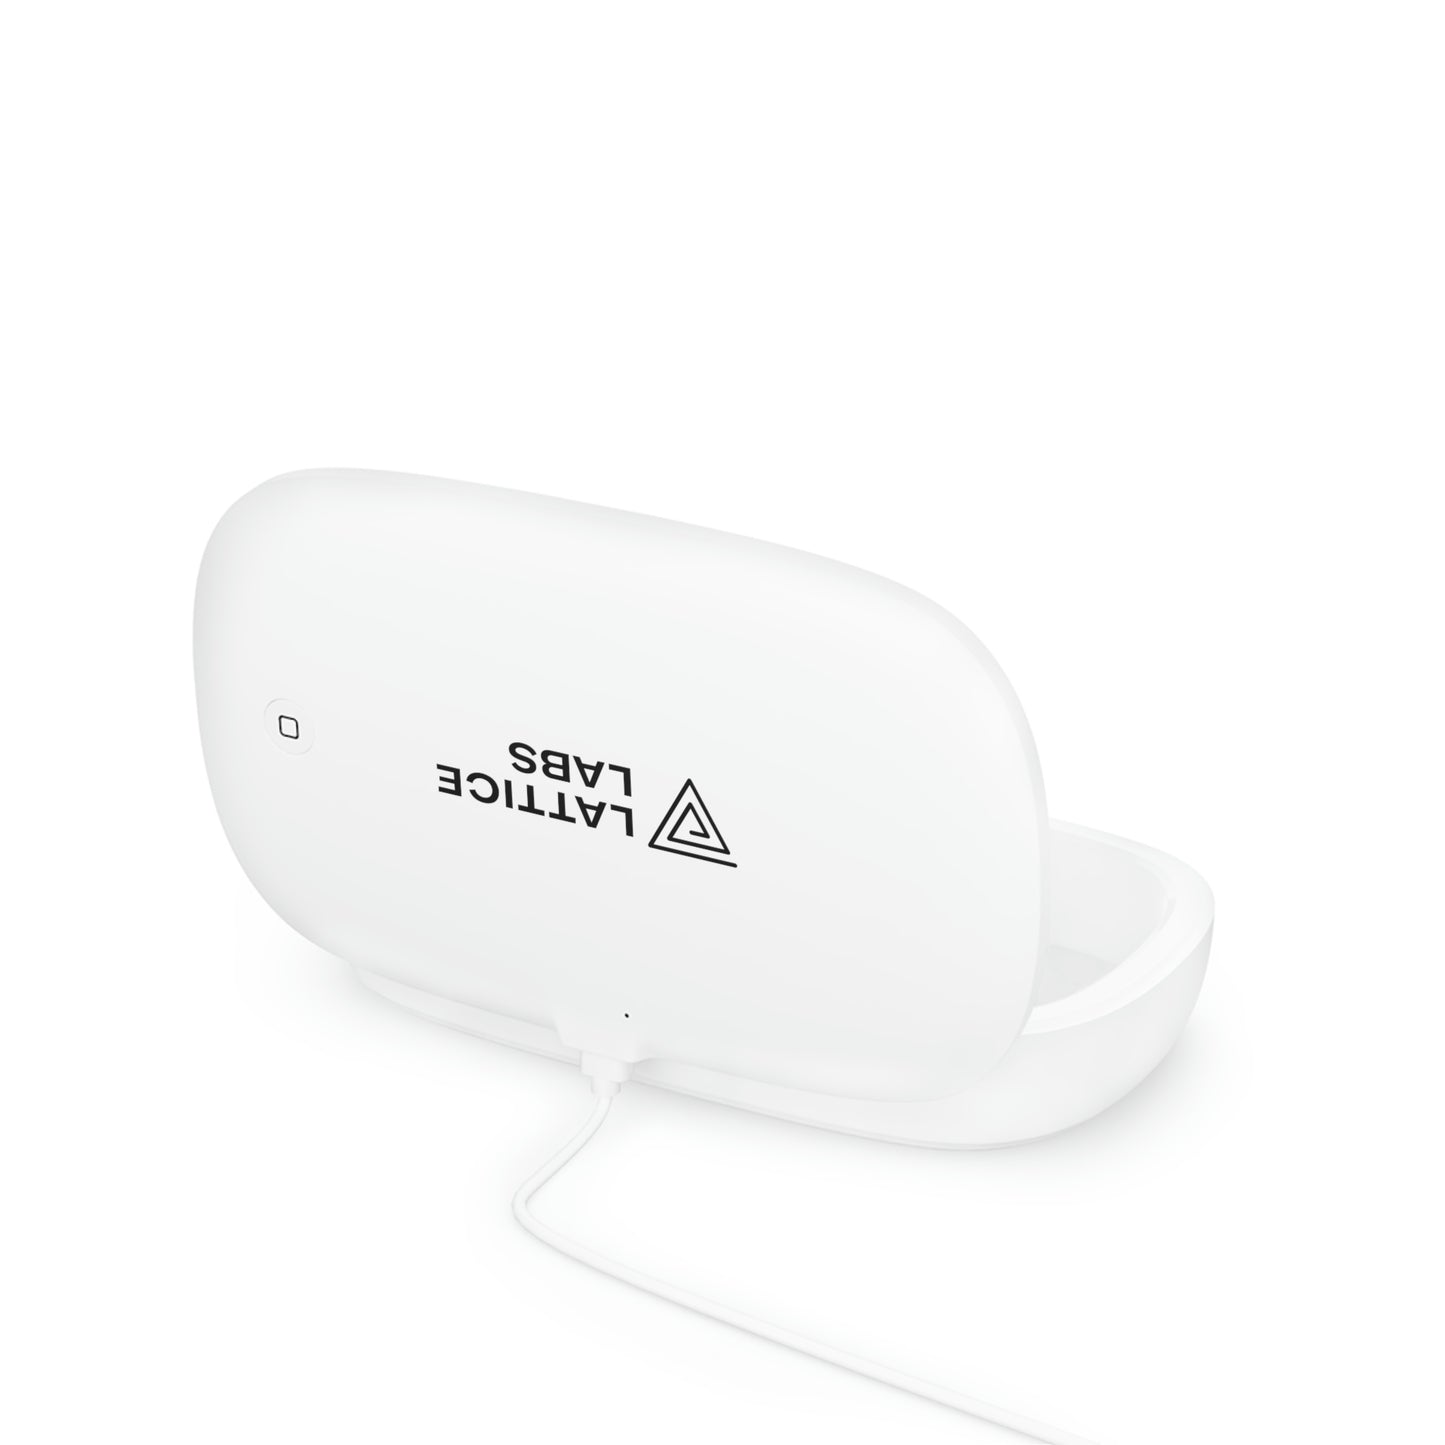 Lattice Labs UV Phone Sanitizer and Wireless Charging Pad